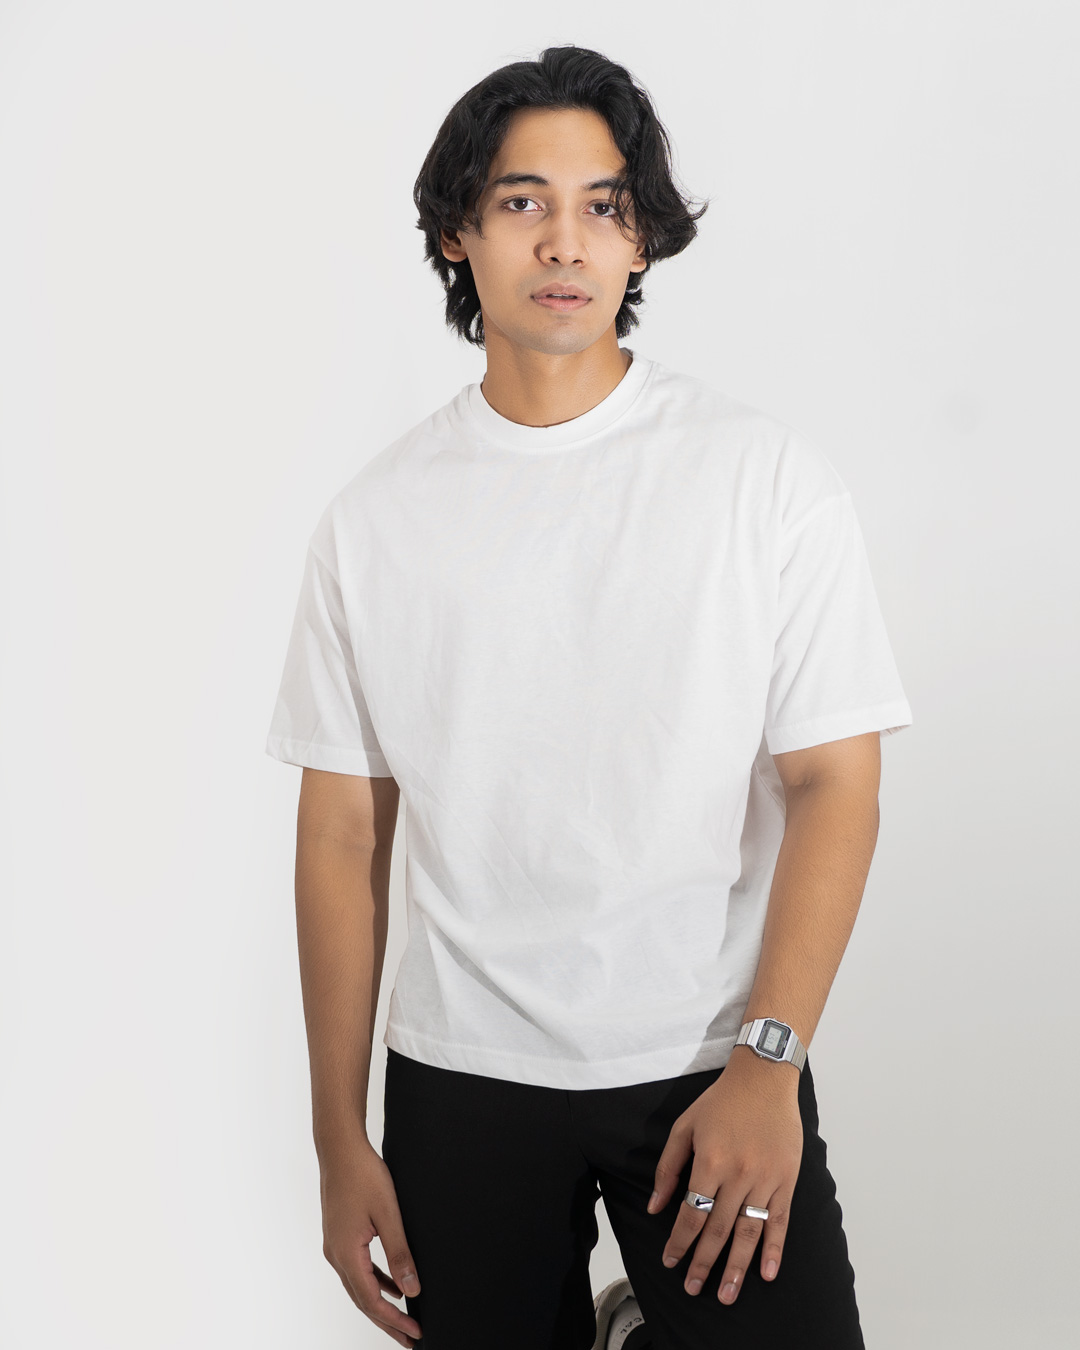 Unisex White Drop Shoulder T-shirt - FashionHQ